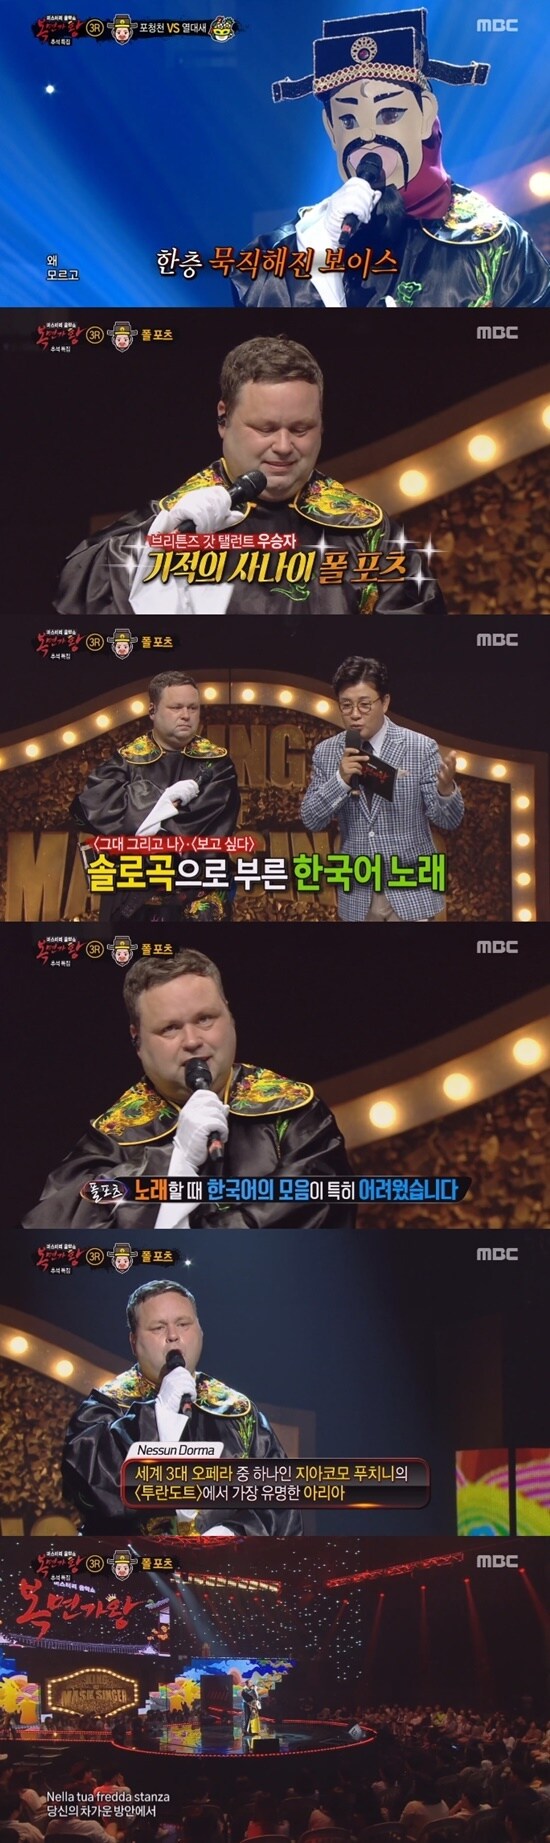 MBC '일밤 - 미스터리 음악쇼 복면가왕' 방송 화면 캡처 © News1